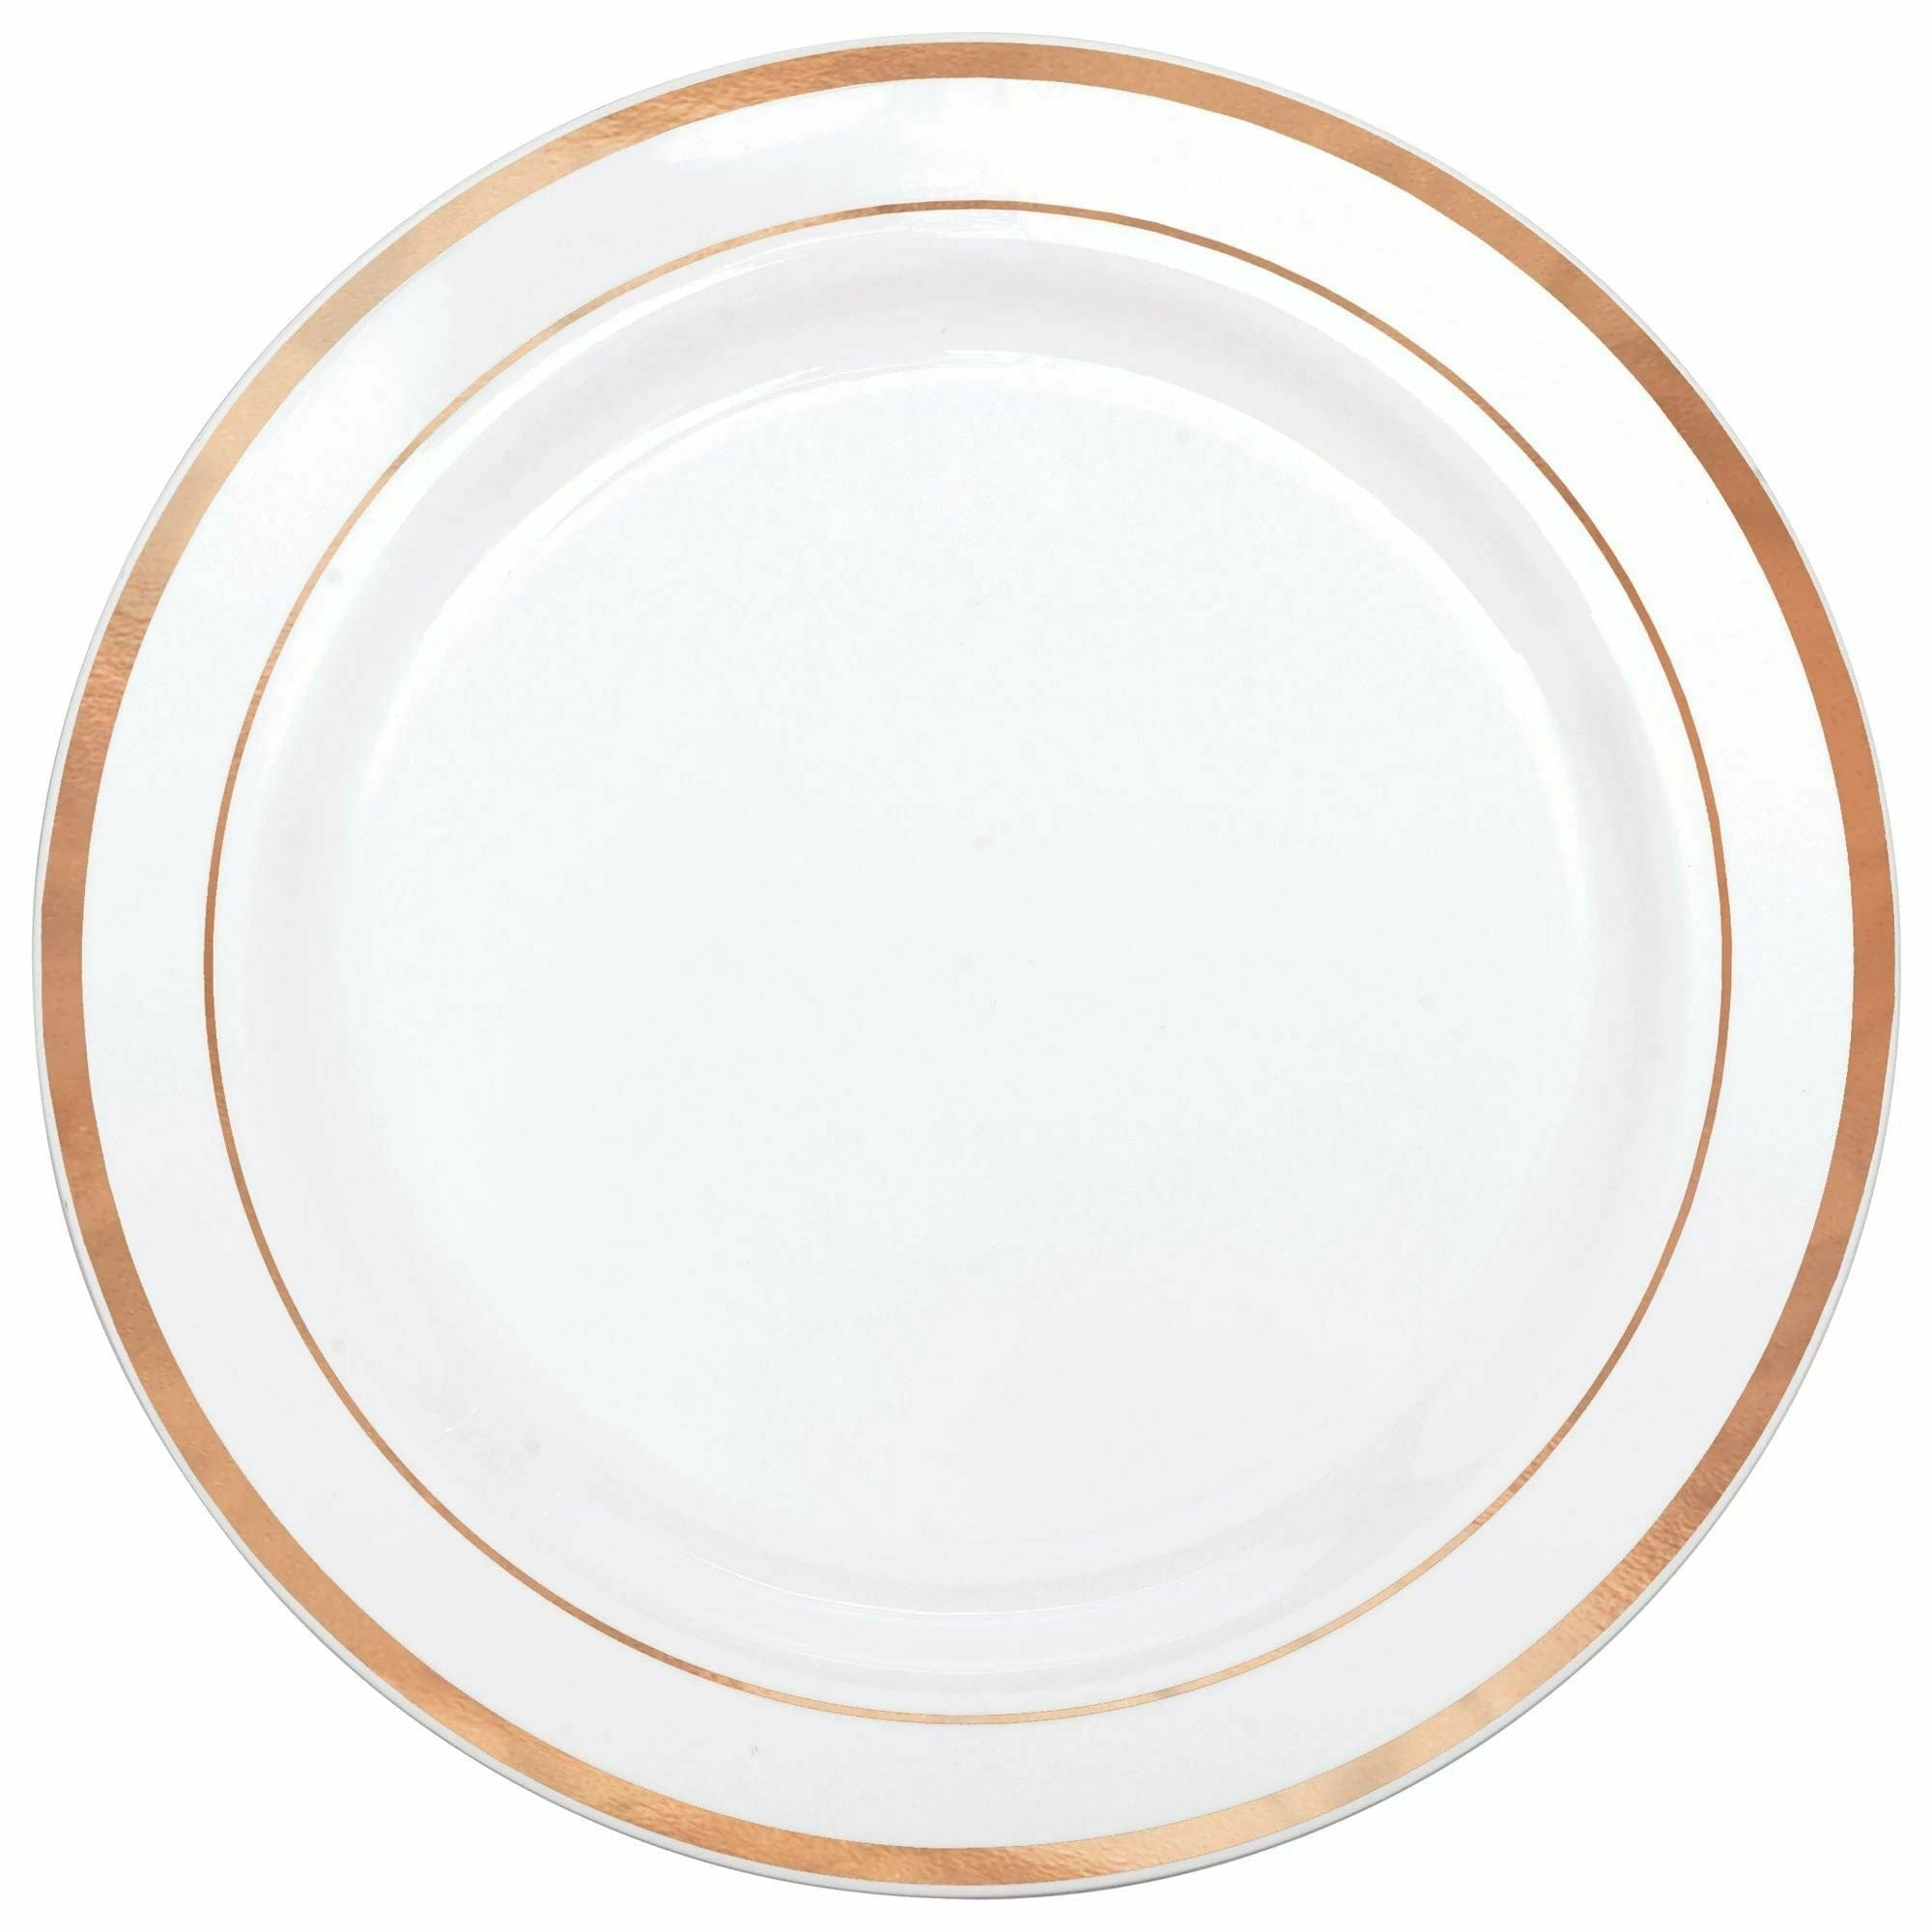 Amscan BASIC Premium 10 1/4" Plastic Plate with Rose Gold Trim